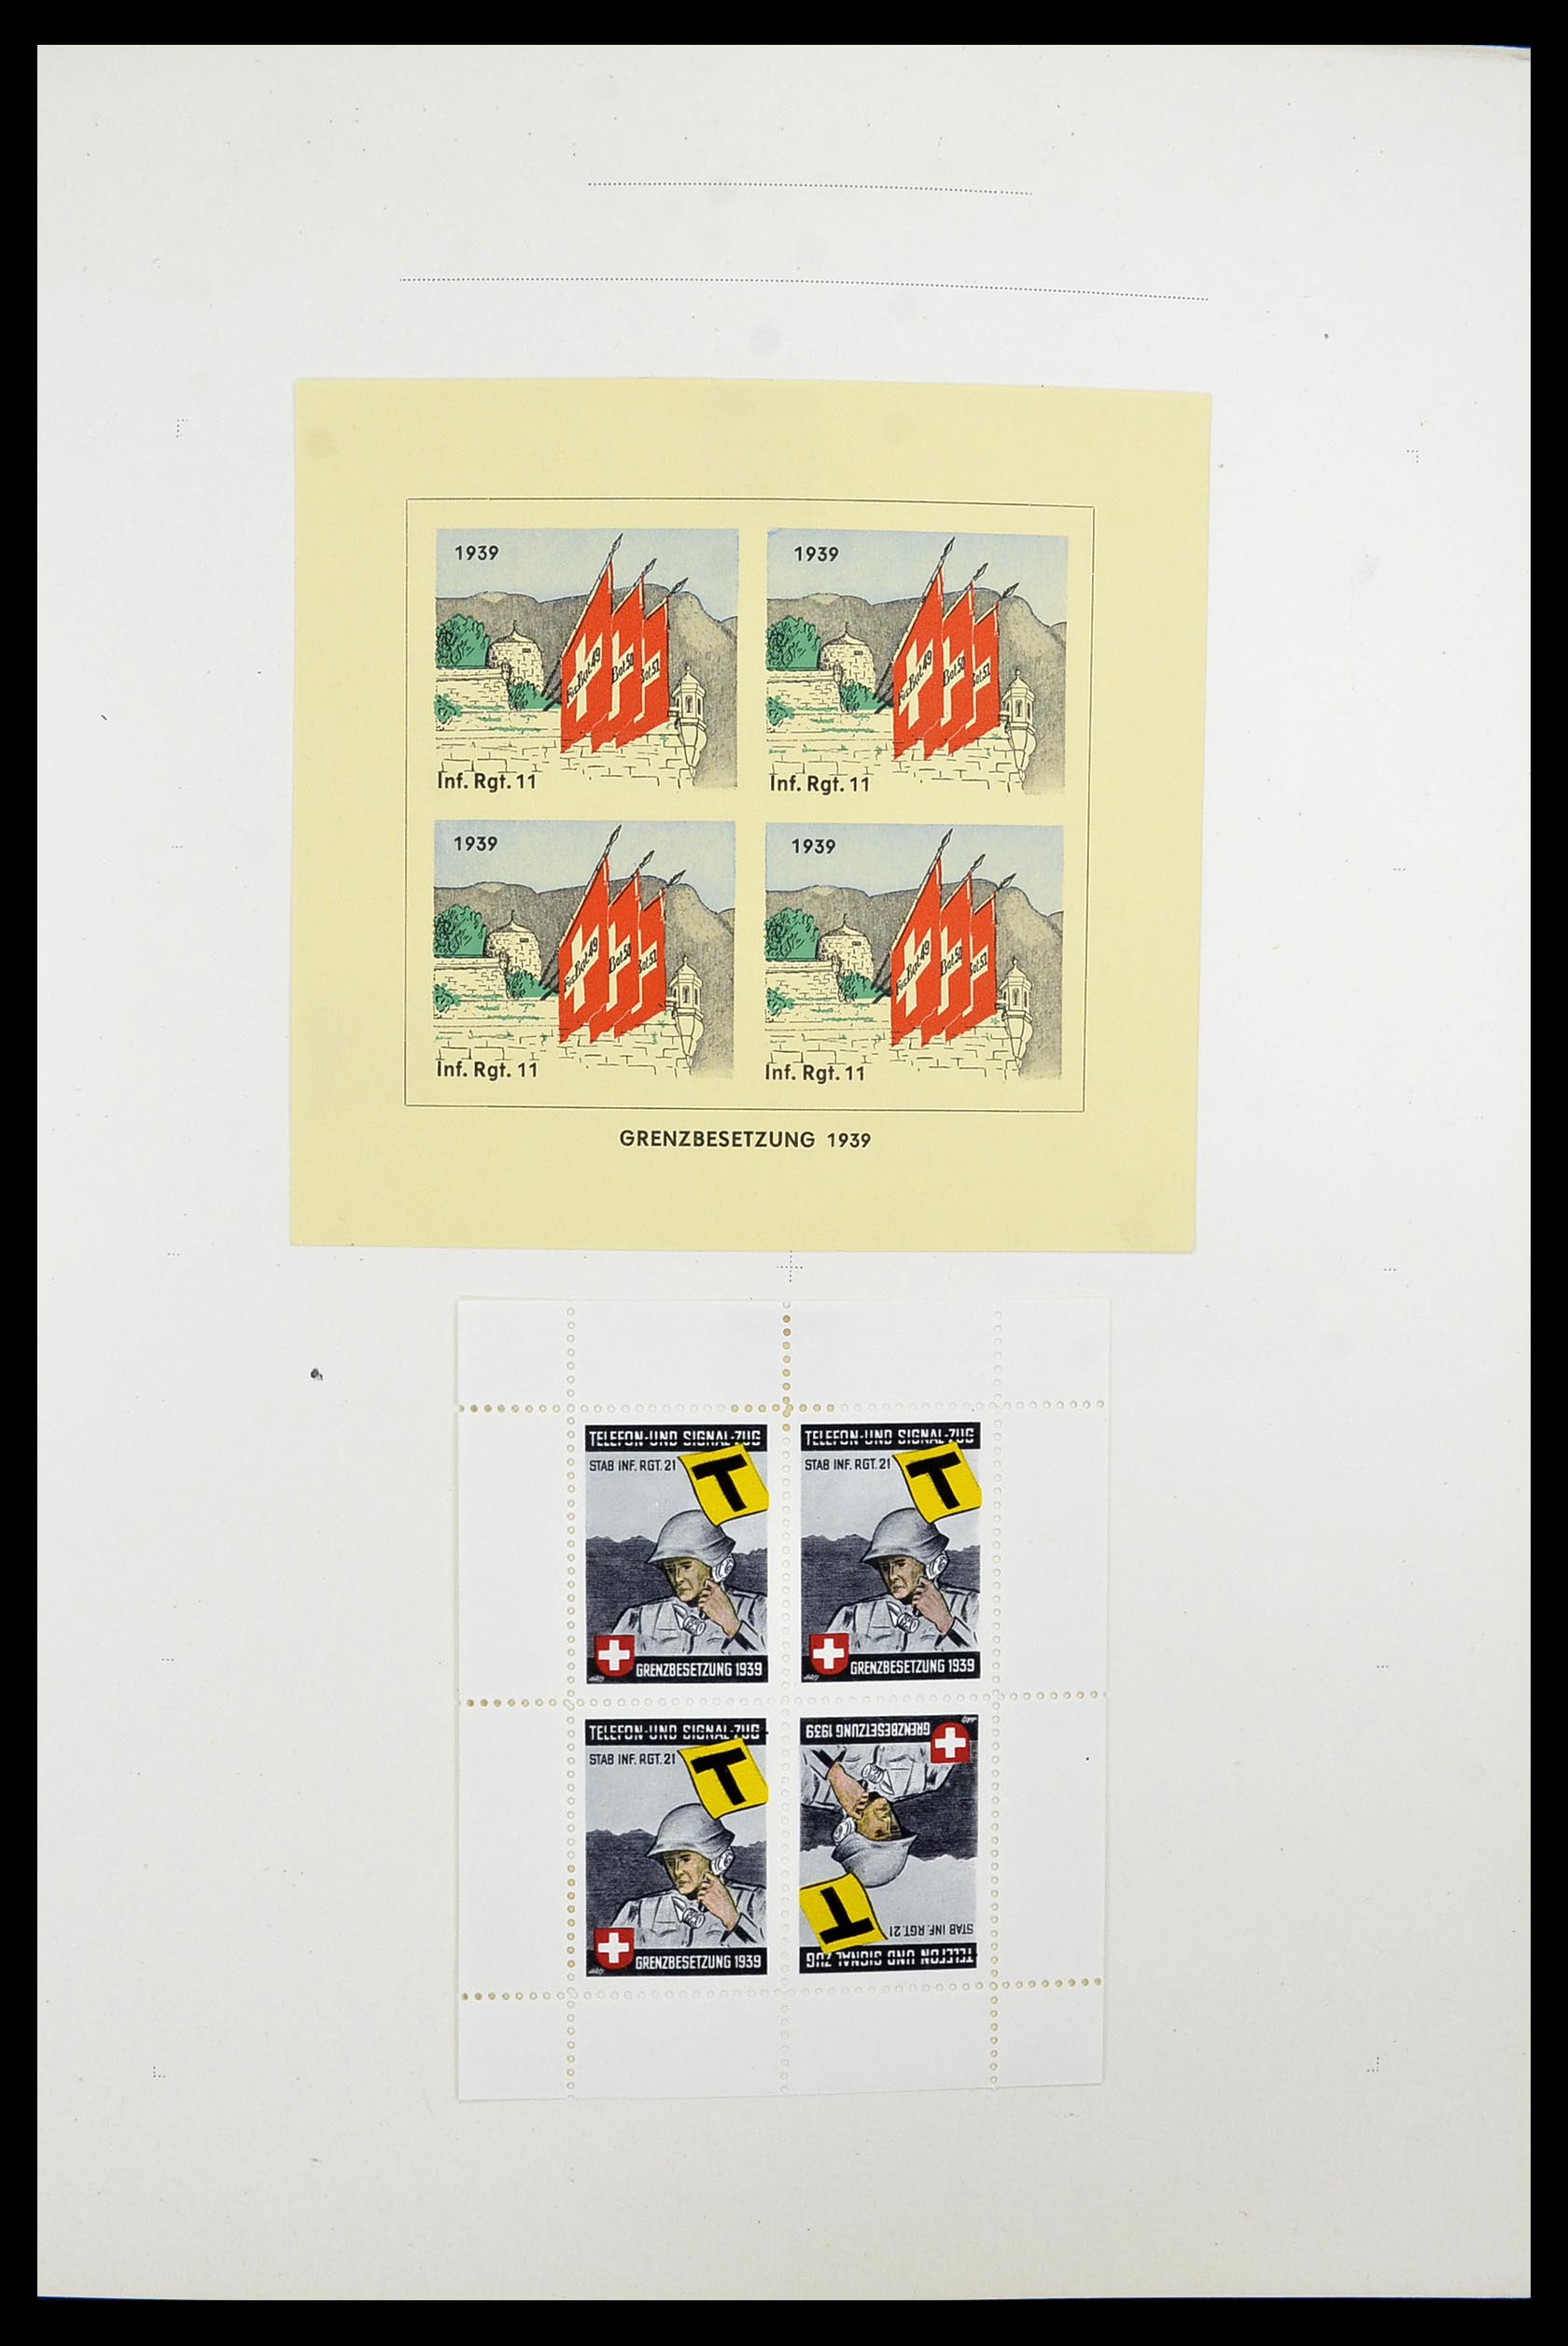 34234 019 - Stamp collection 34234 Switzerland soldier stamps 1939-1945.